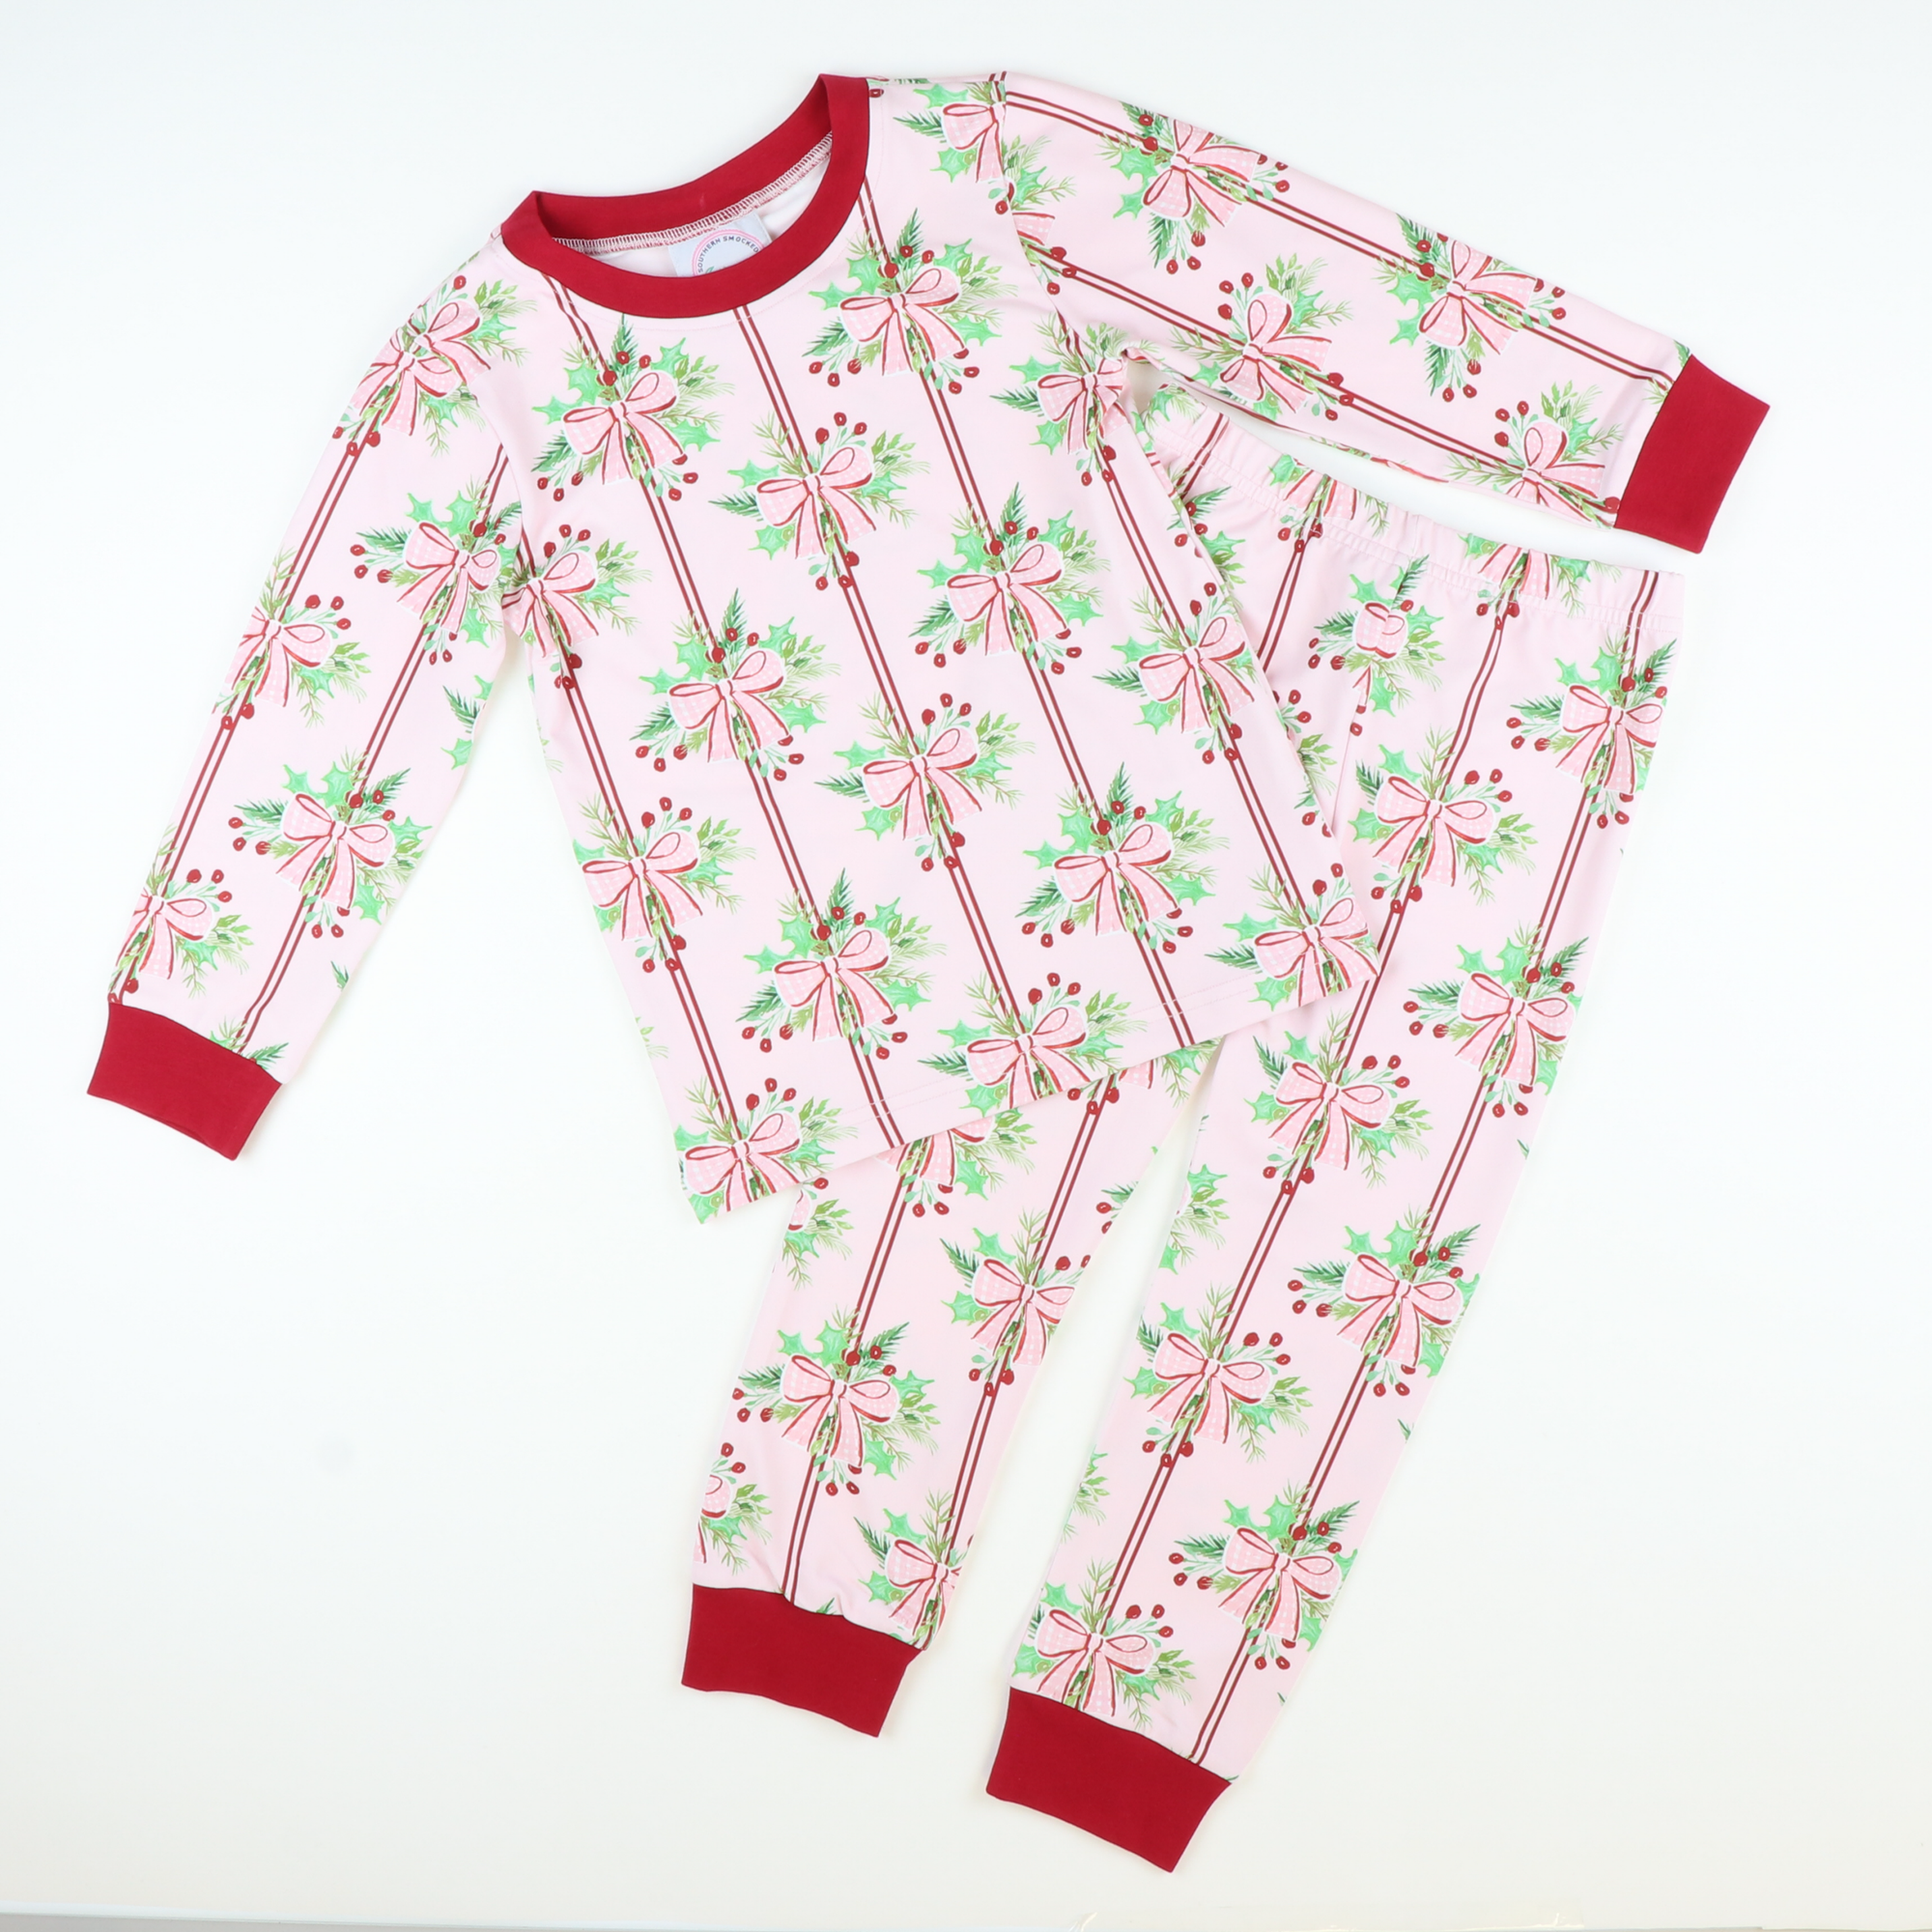 Berries & Bows Knit Pajama Set